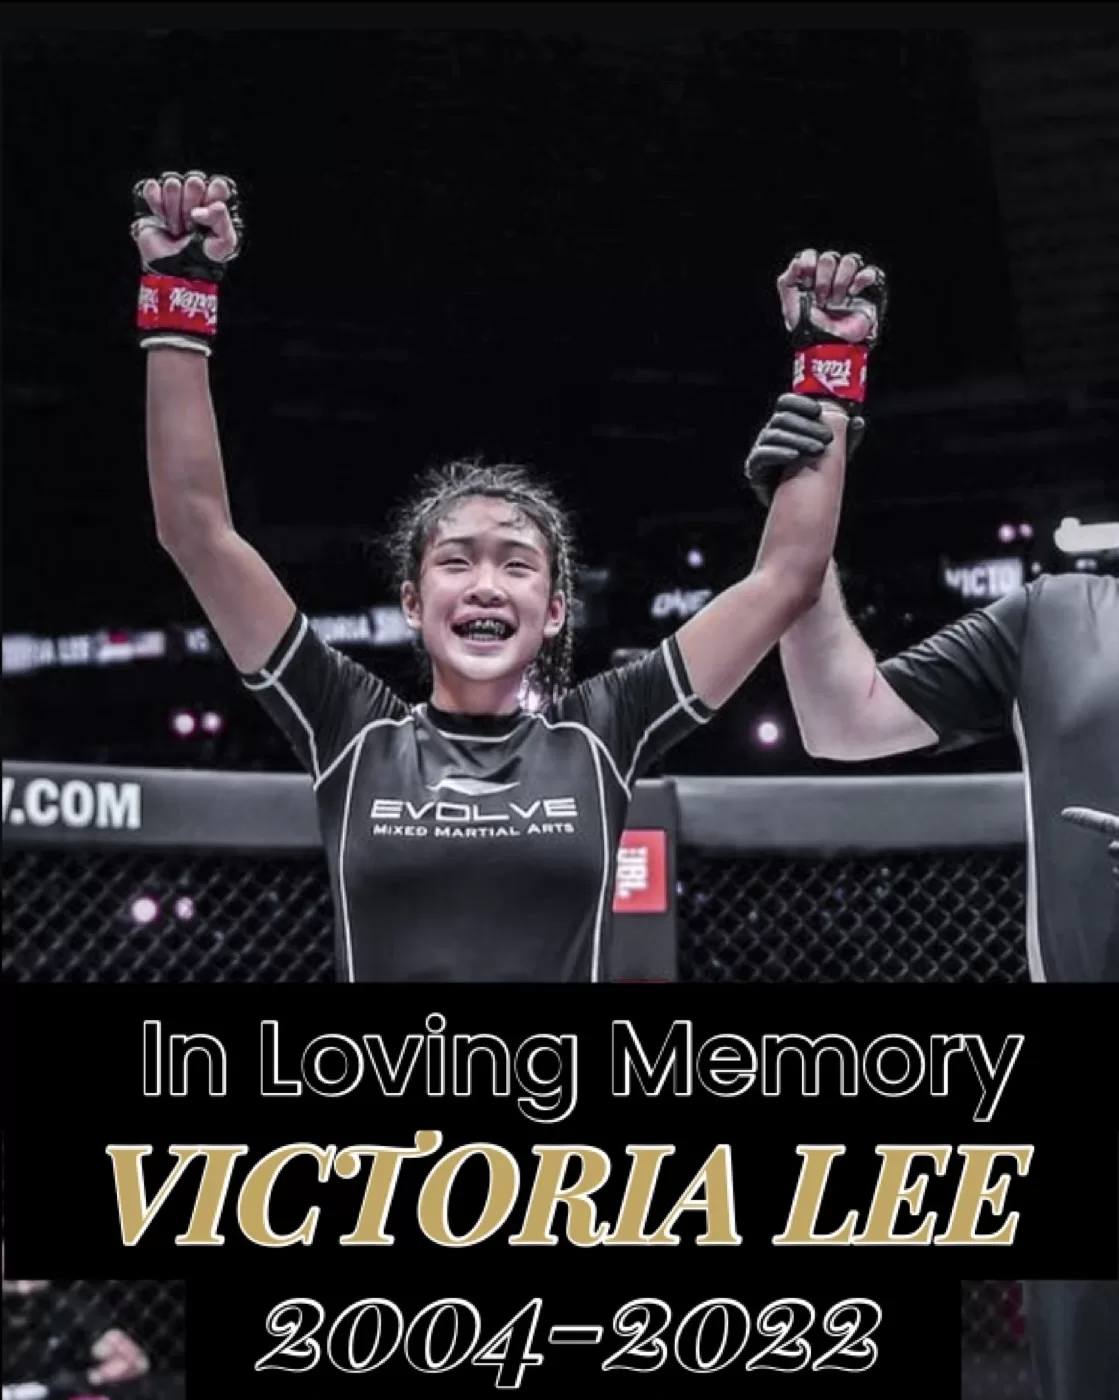 Victoria Lee dead at 18